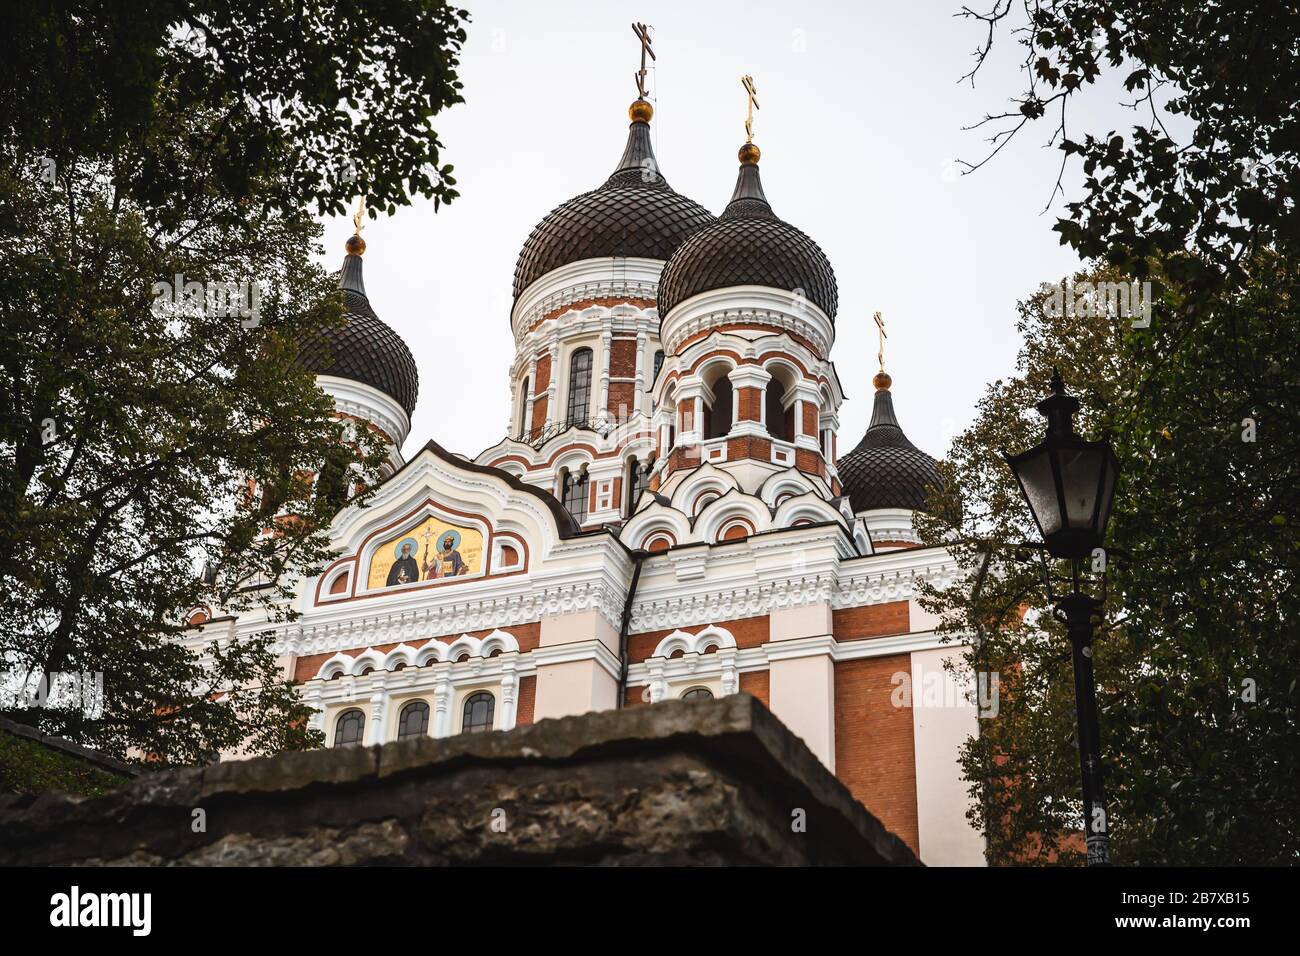 Chiesa ortodossa russa: Cattedrale Alexander Nevsky (Aleksander Nevski Katedraal) in Estonia, Tallinn Foto Stock